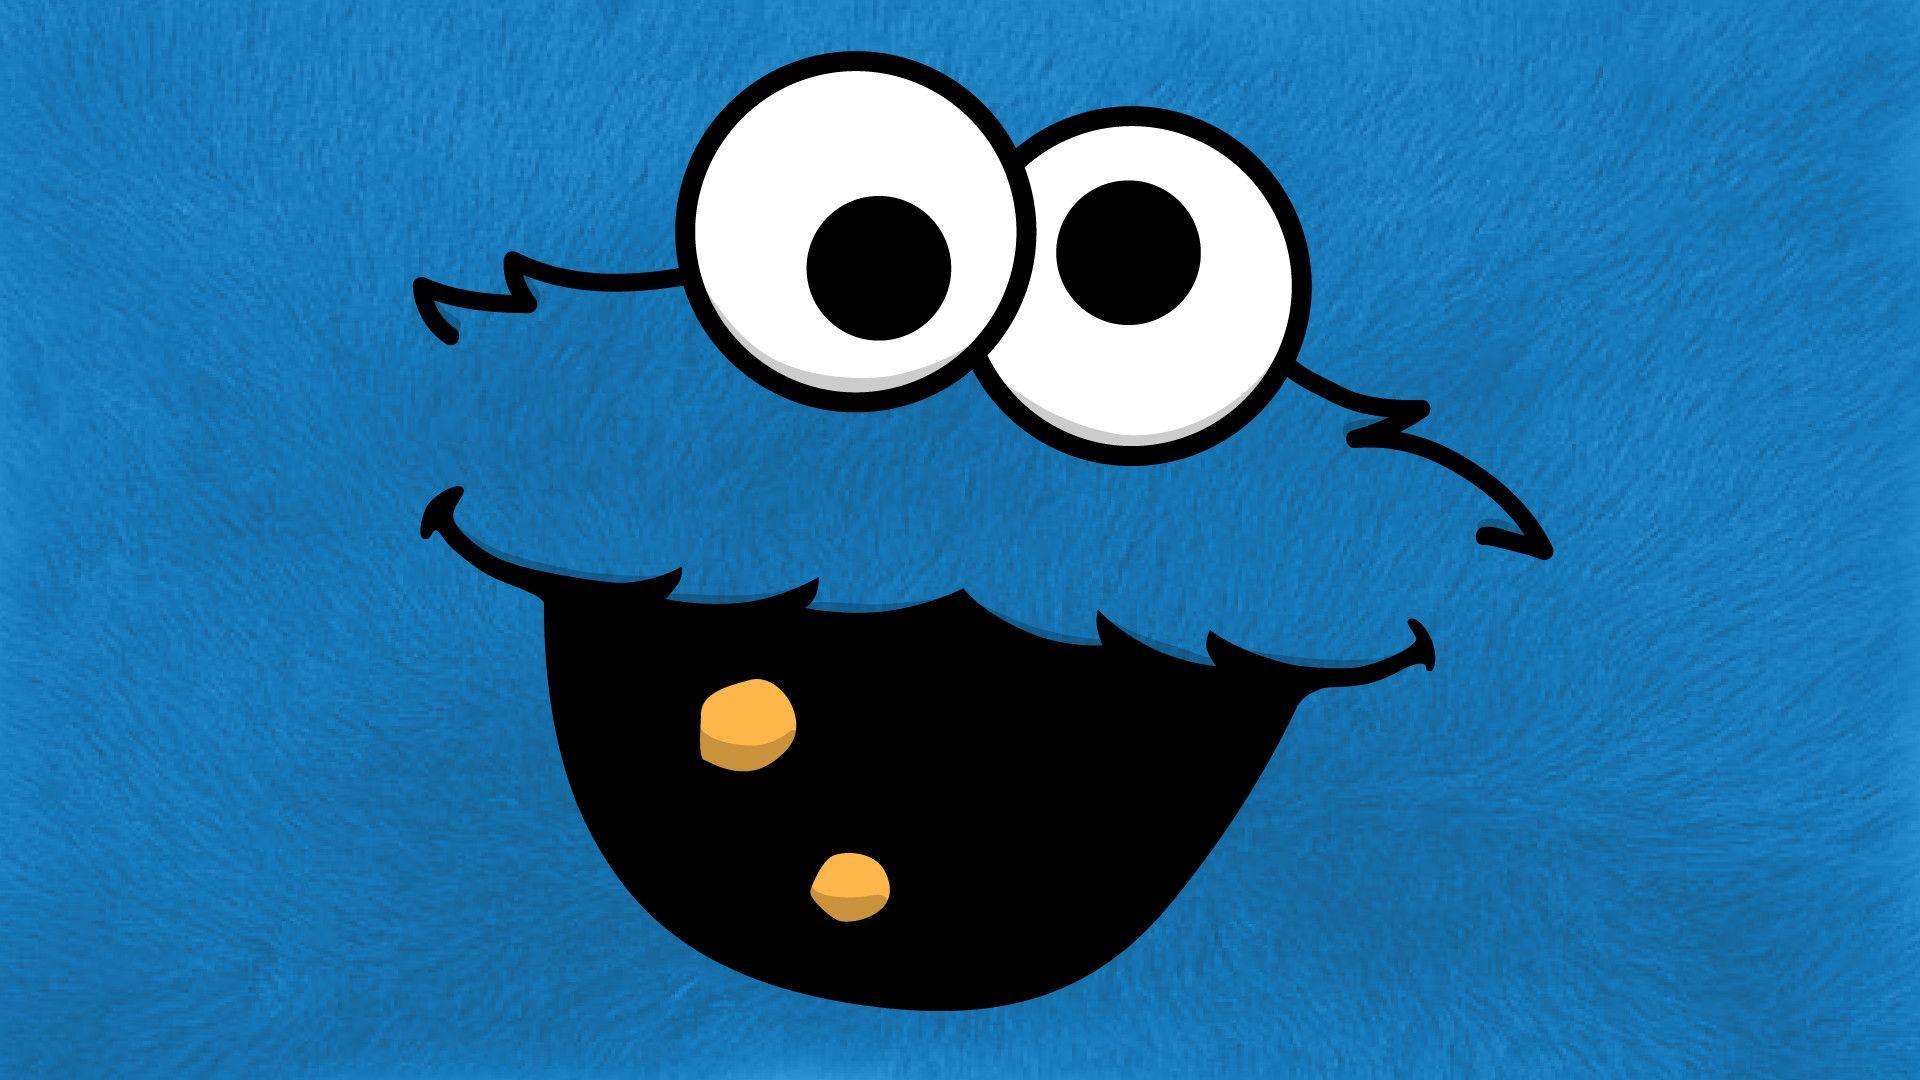 Cookie Monster Wallpaper HD